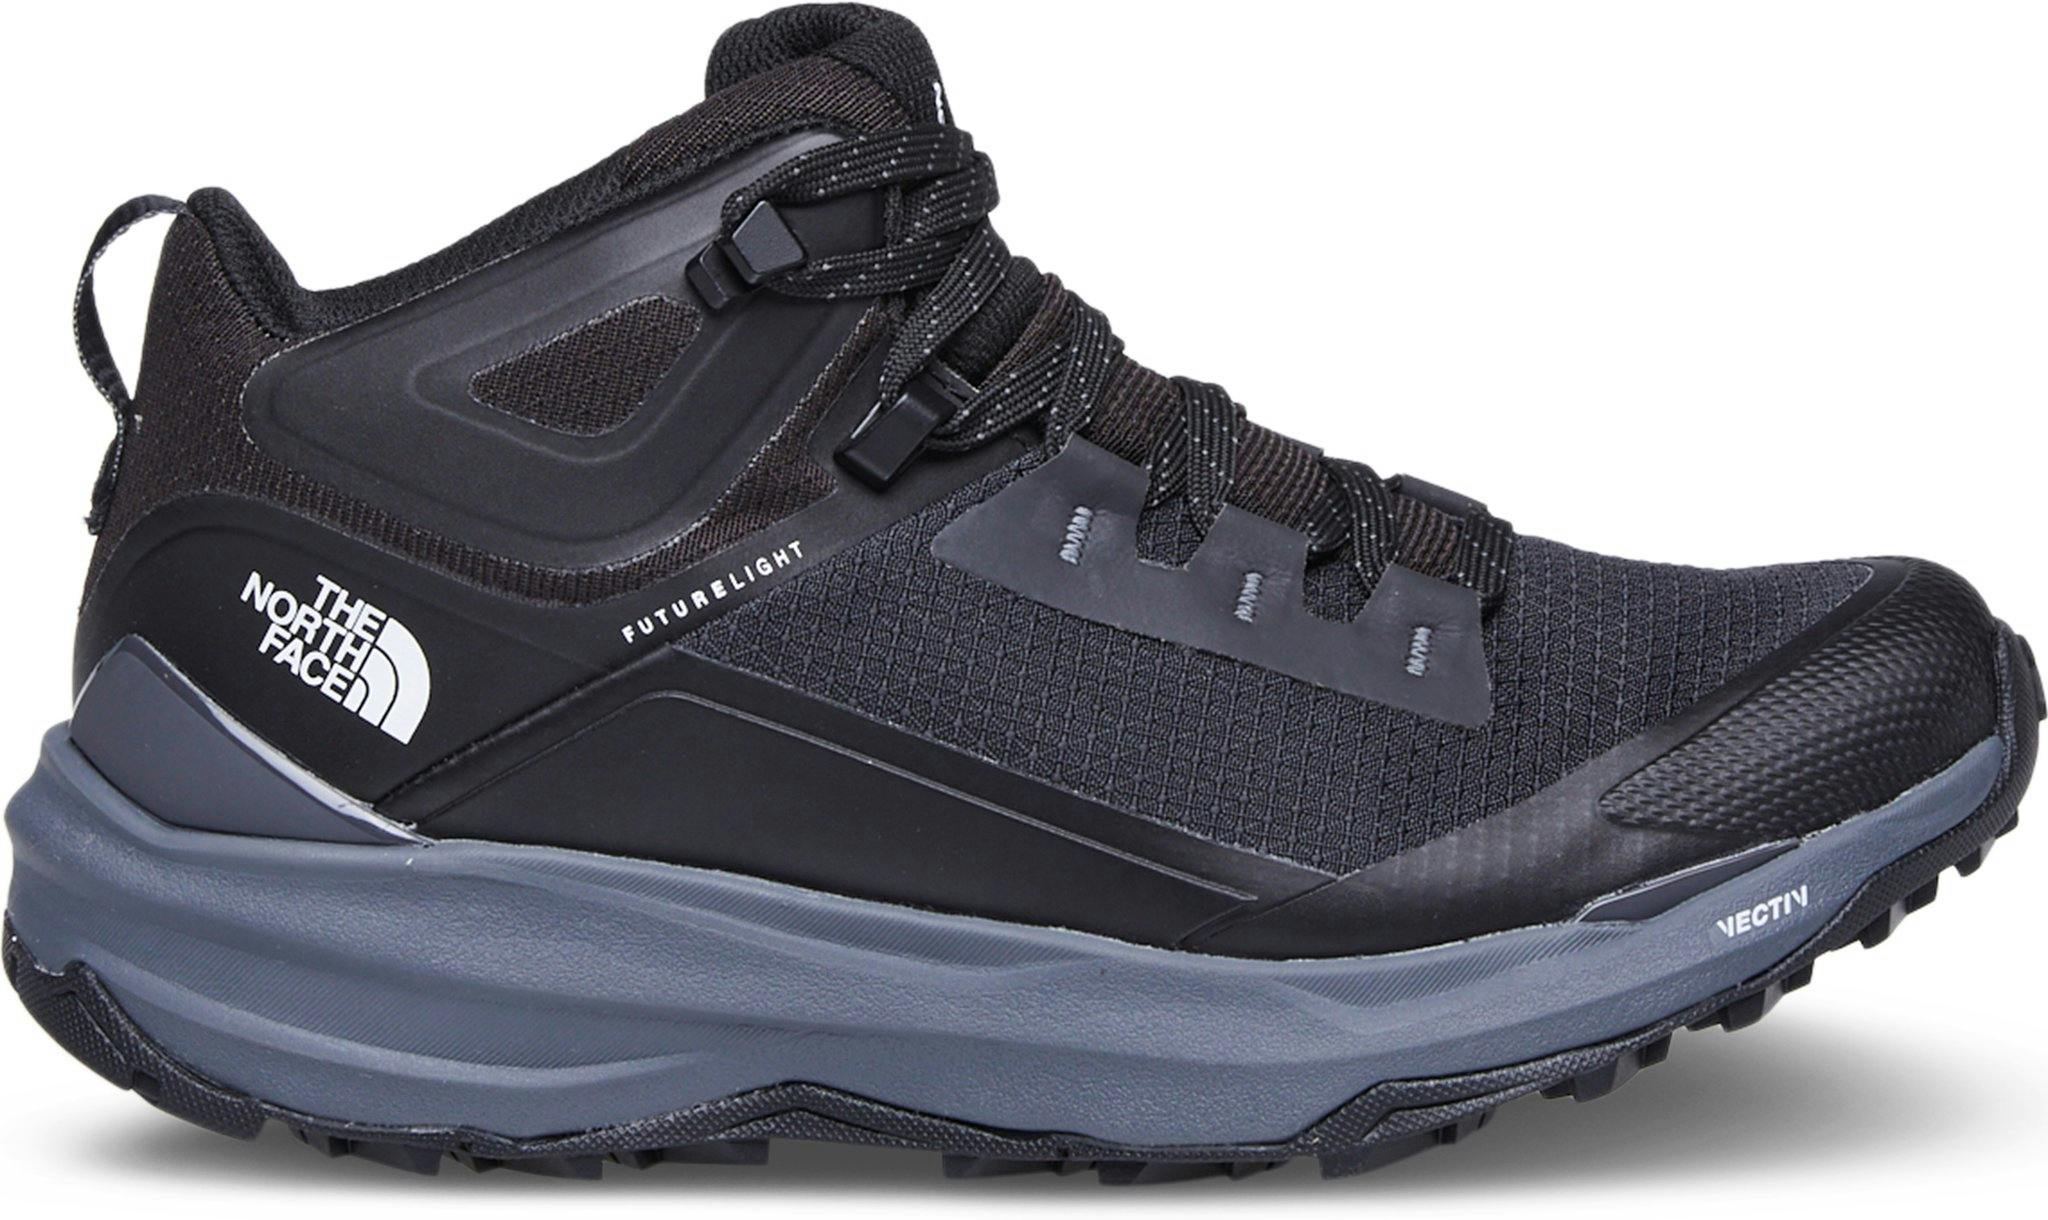 Product image for Exploris II VECTIV Mid FUTURELIGHT Hiking Boots - Women’s